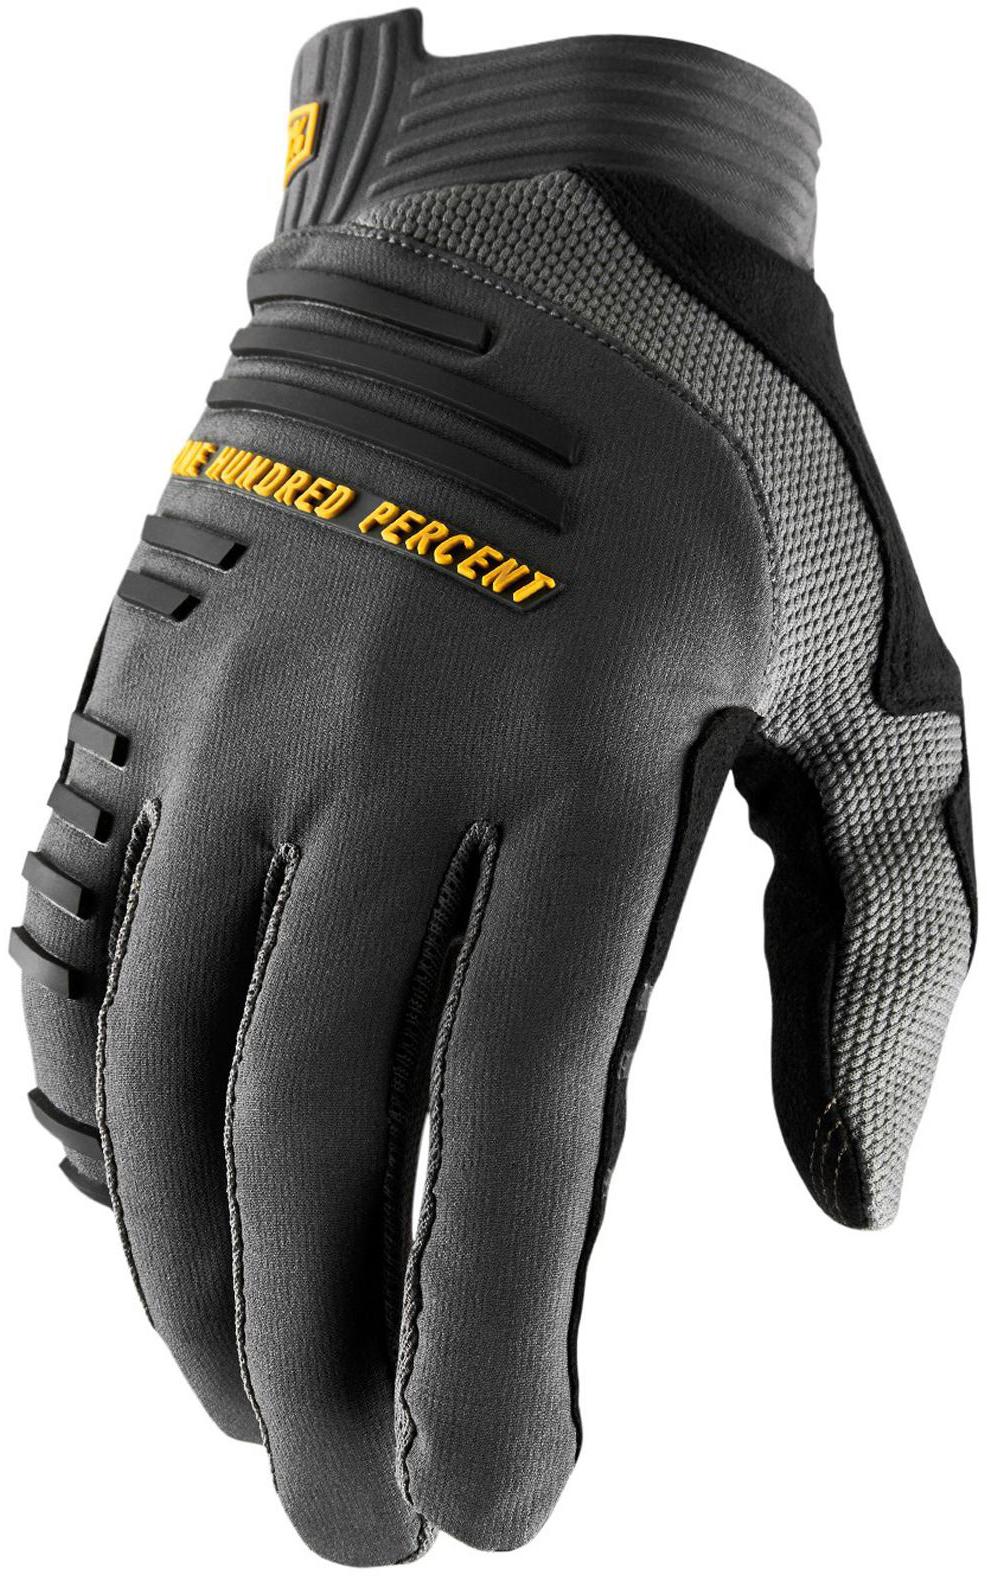 100% Cognito D30 Gloves - Sm Black/charcoal   Gloves